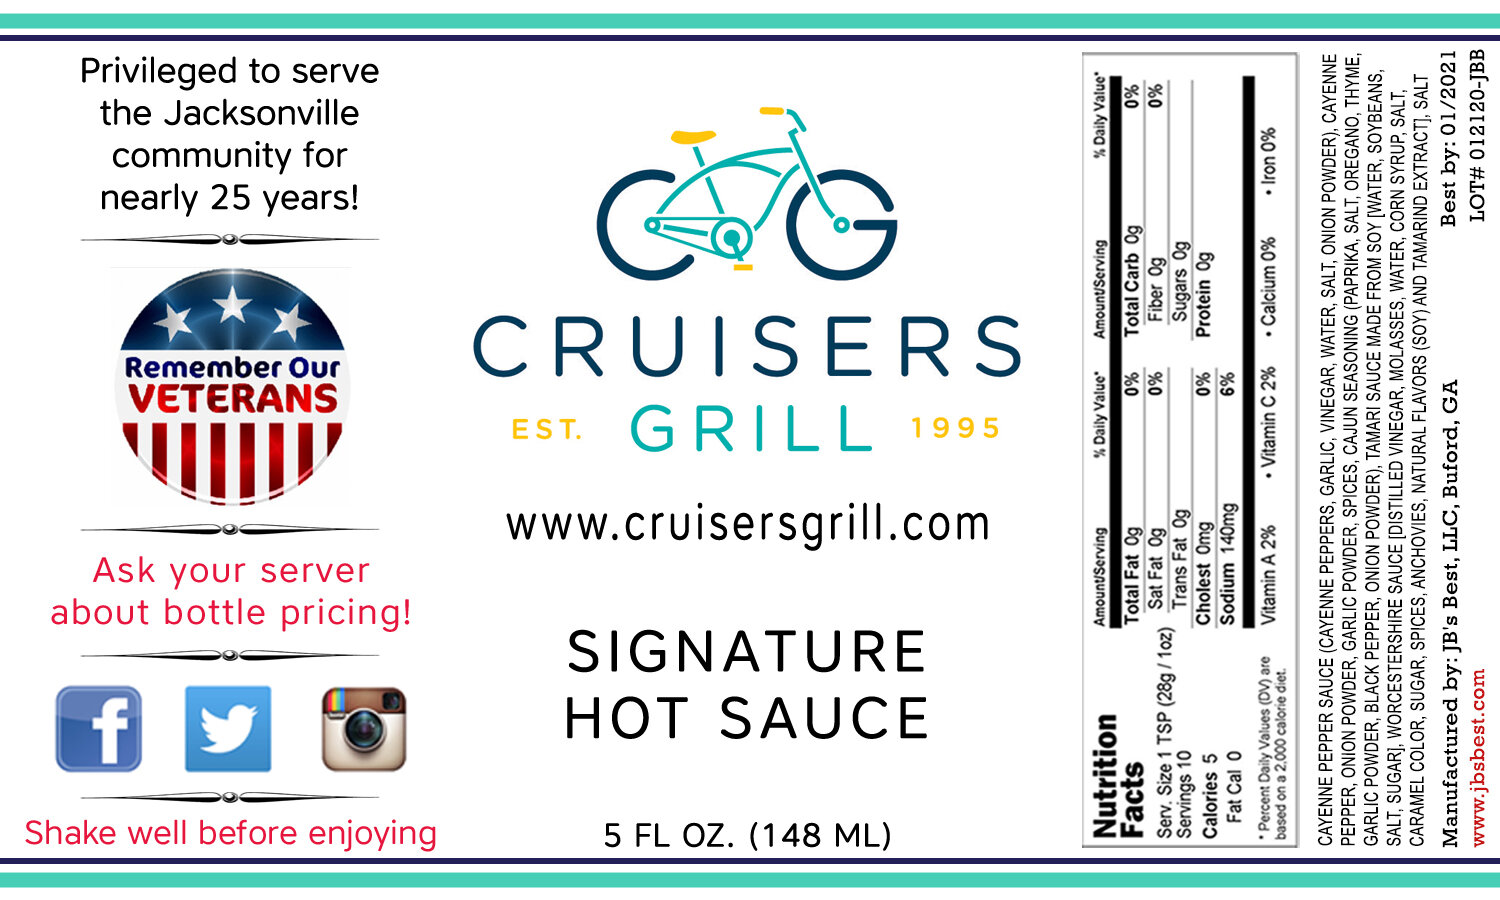 Cruisers-Grill-NEW-3x5.jpg